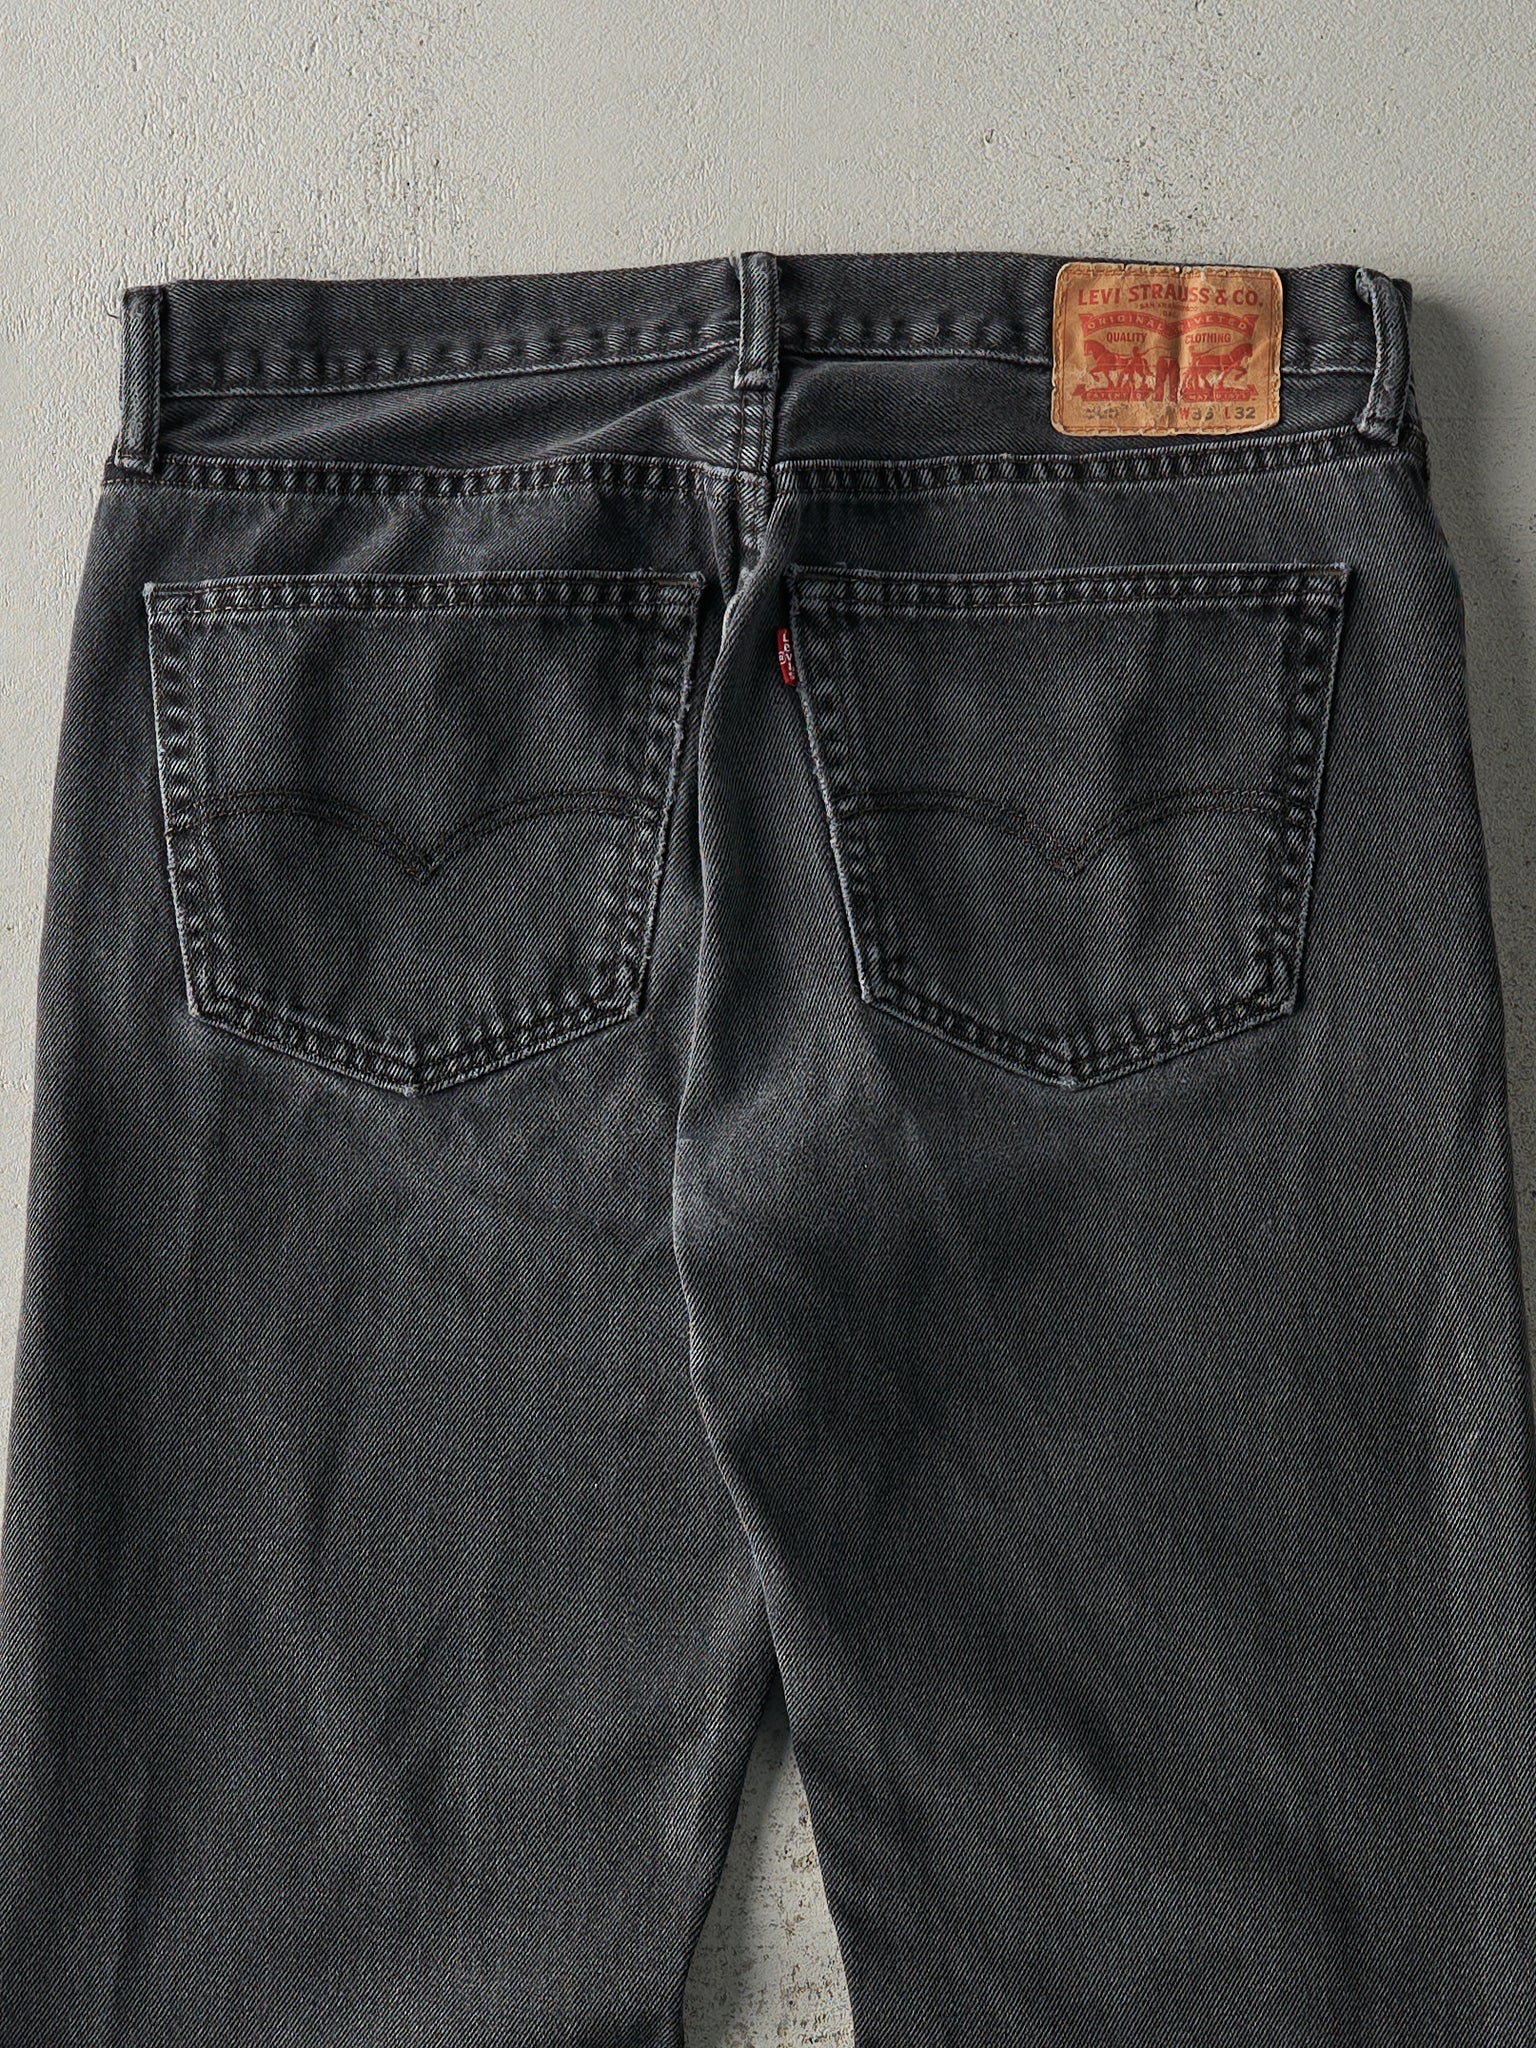 Vintage Y2K Faded Black Levi's 505 Denim Pants (35.5x30)